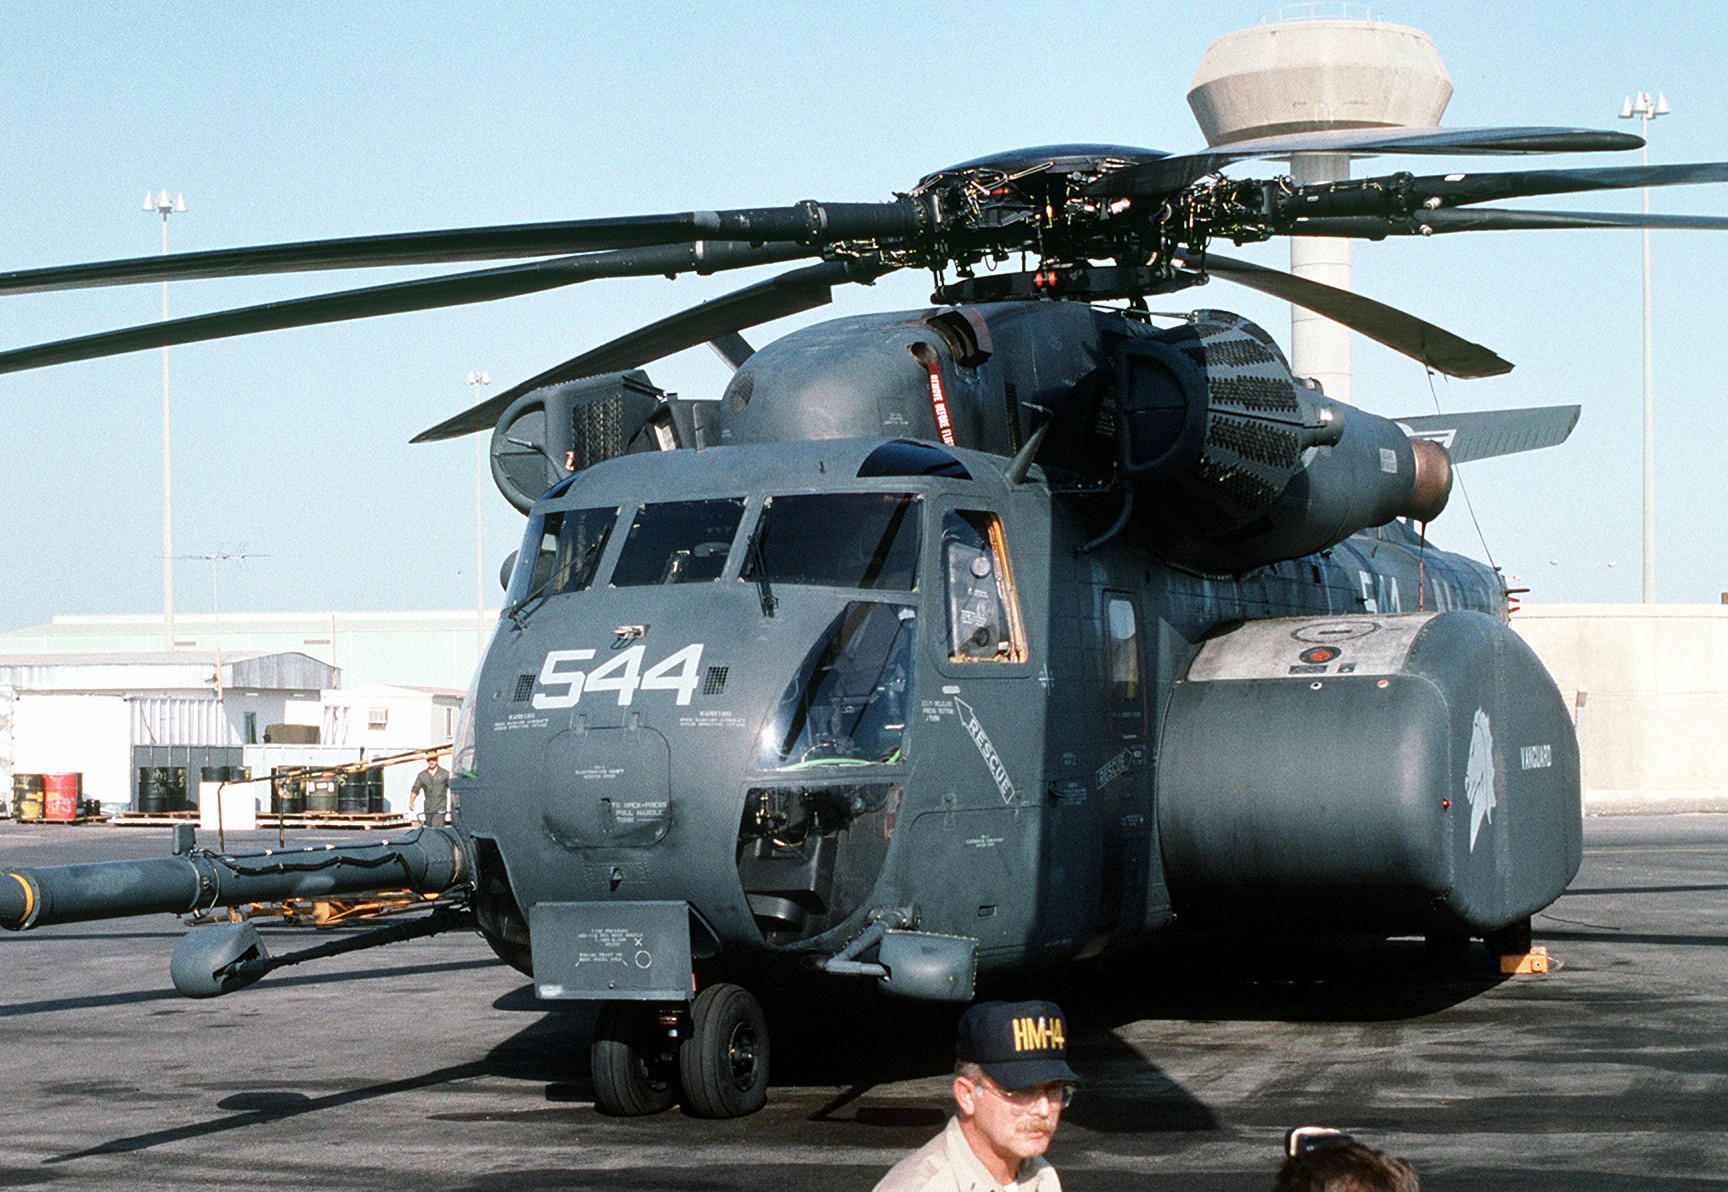 hm-14 vanguard helicopter mine countermeasures squadron navy mh-53e sea dragon 60 operation desert shield 1991